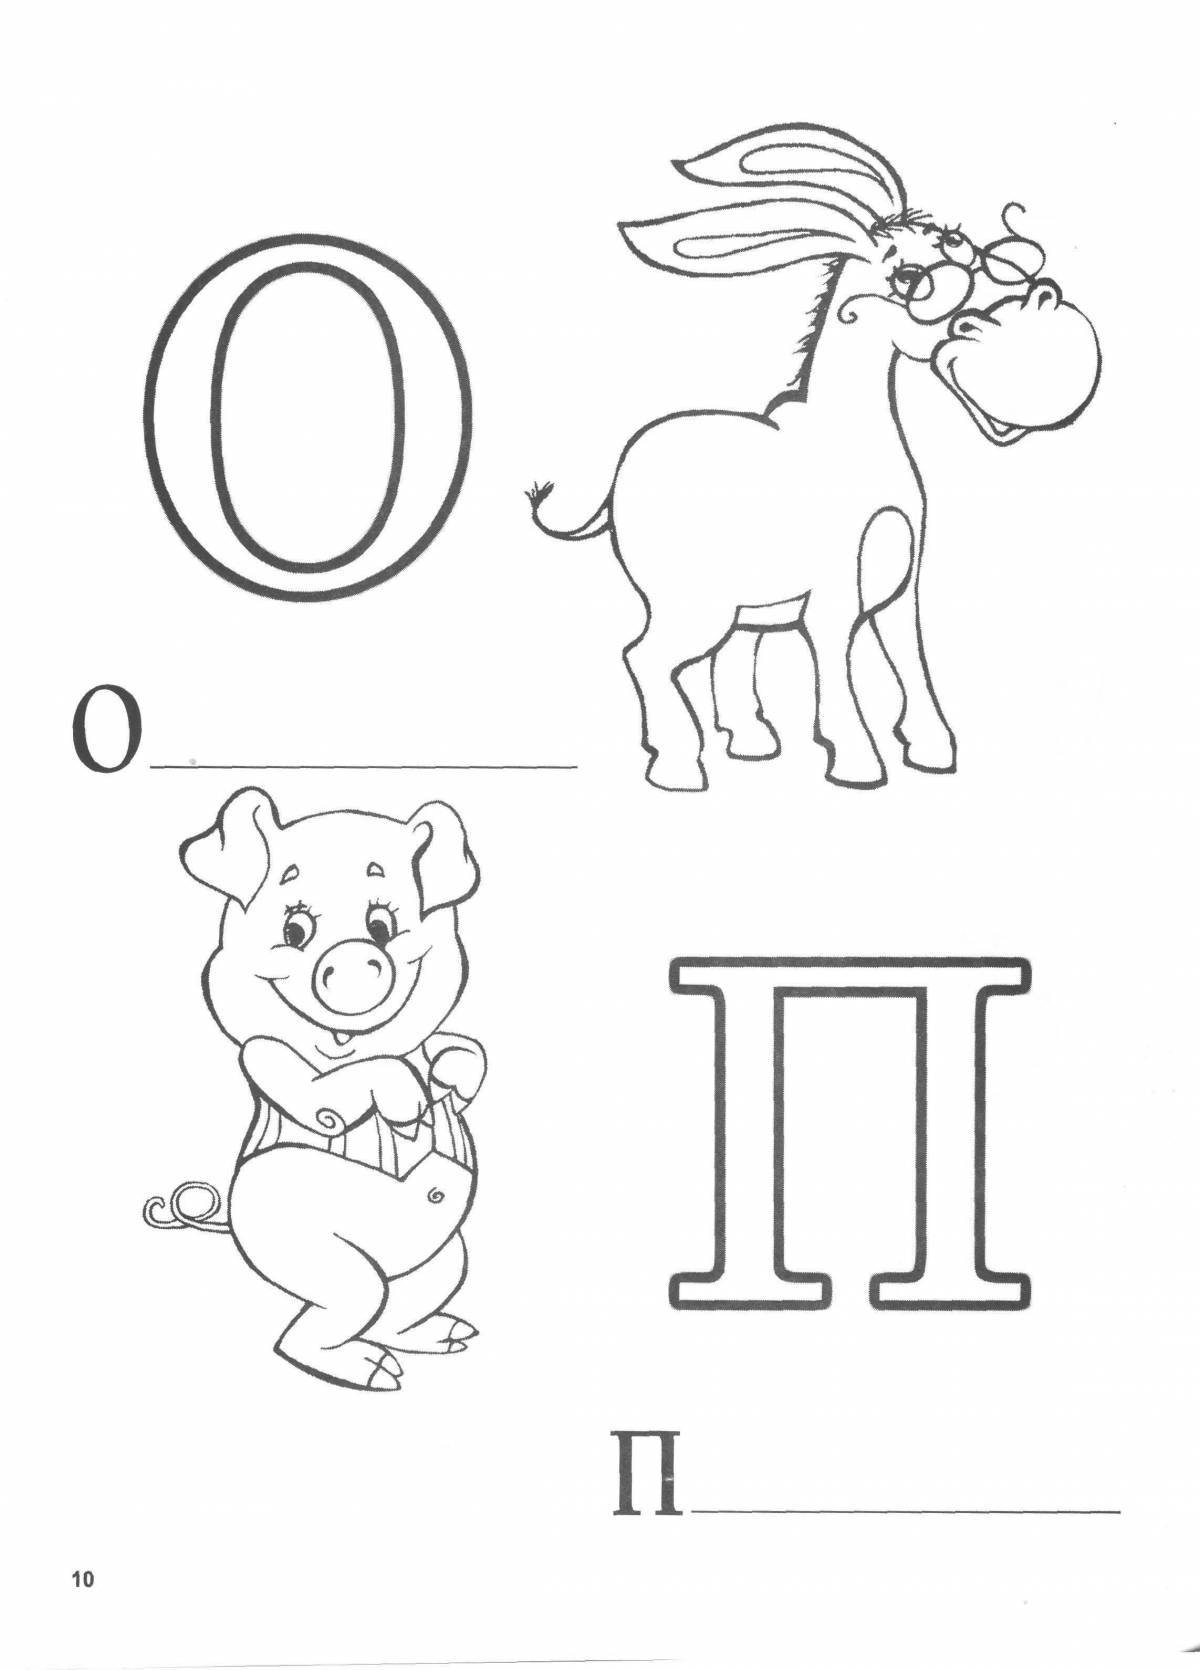 Alphabetic coloring book for preschoolers